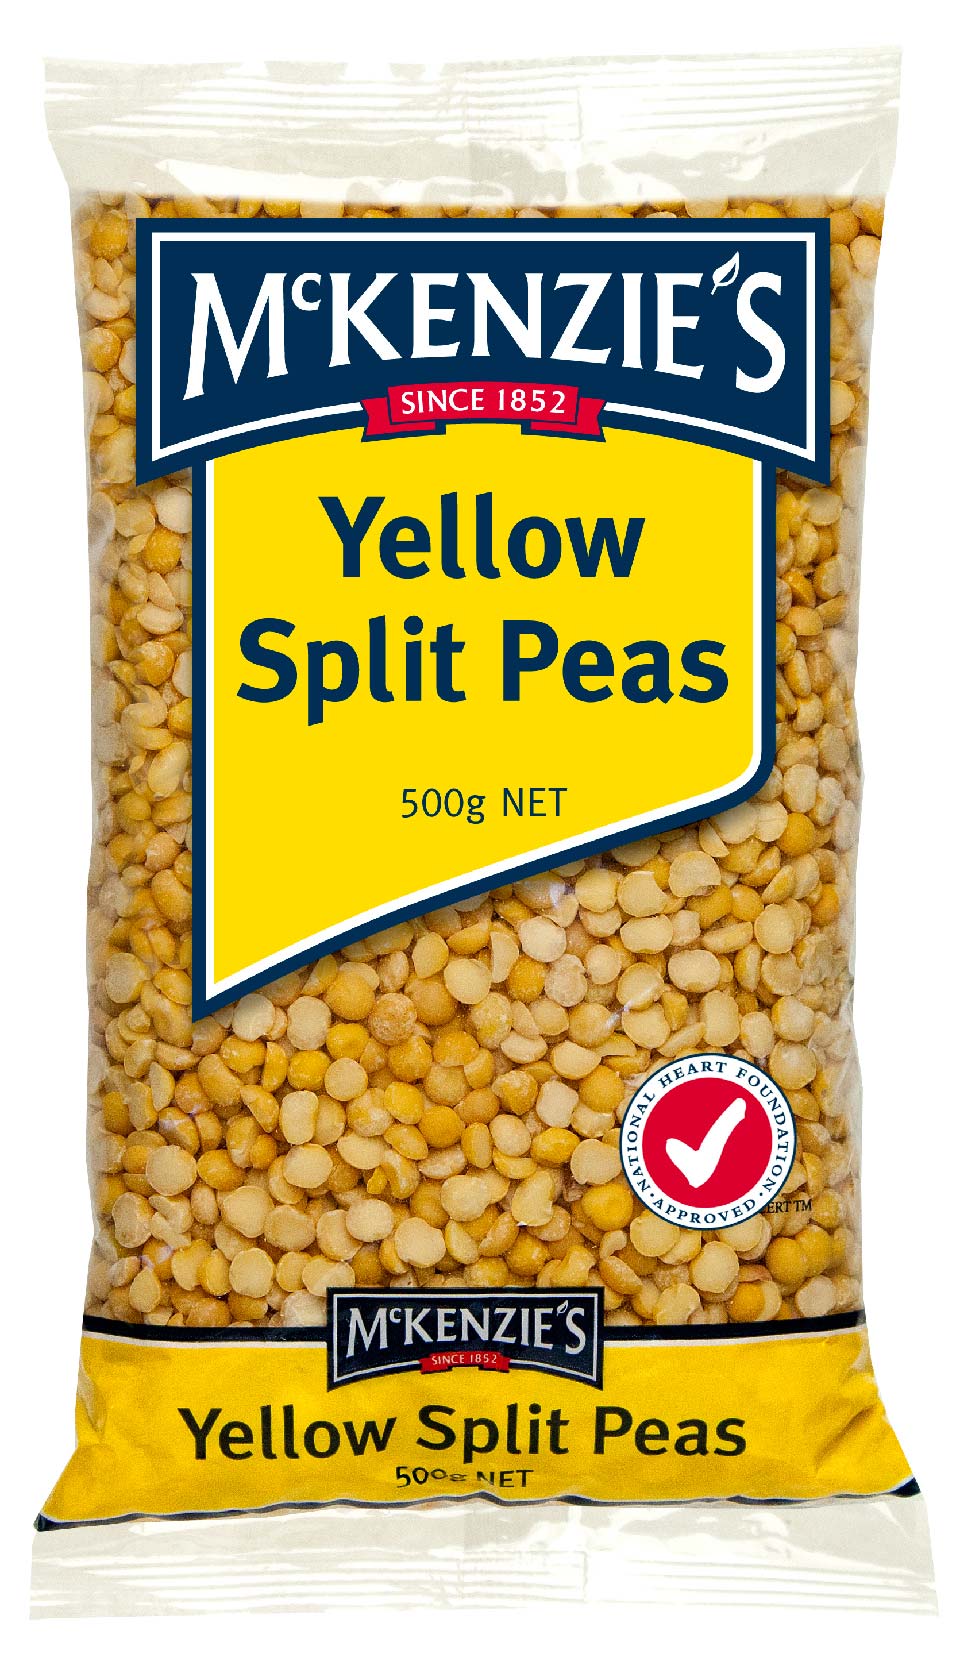 McKenzie’s Yellow Split Peas